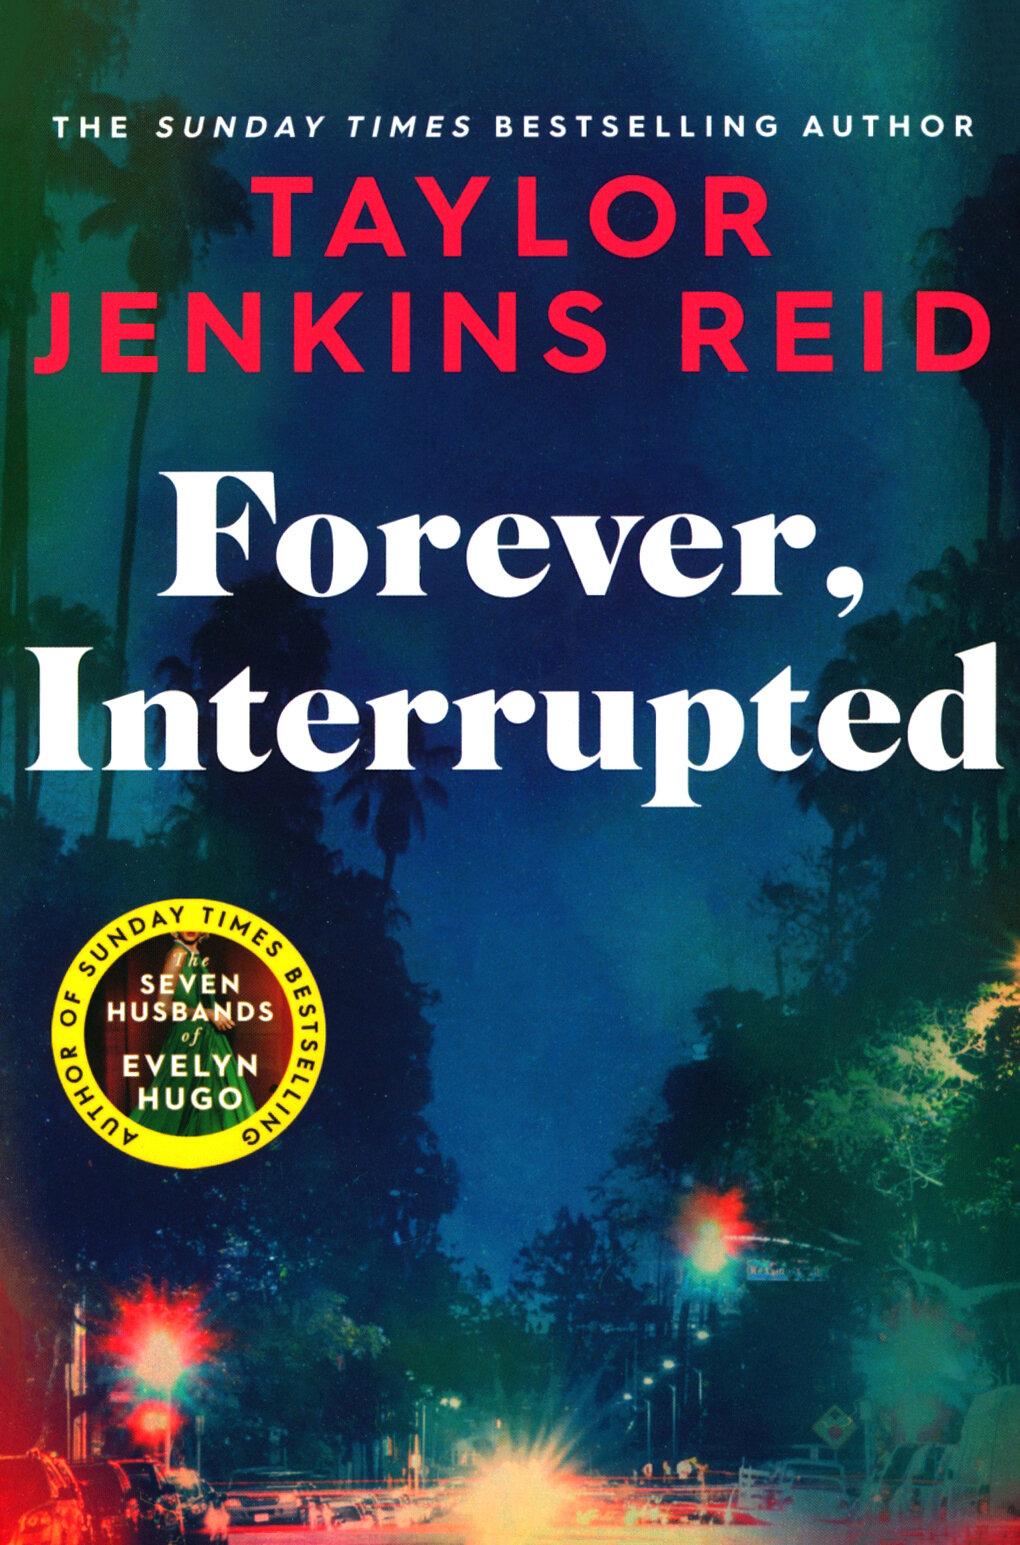 Forever, Interrupted (Reid Taylor Jenkins) - фото №1